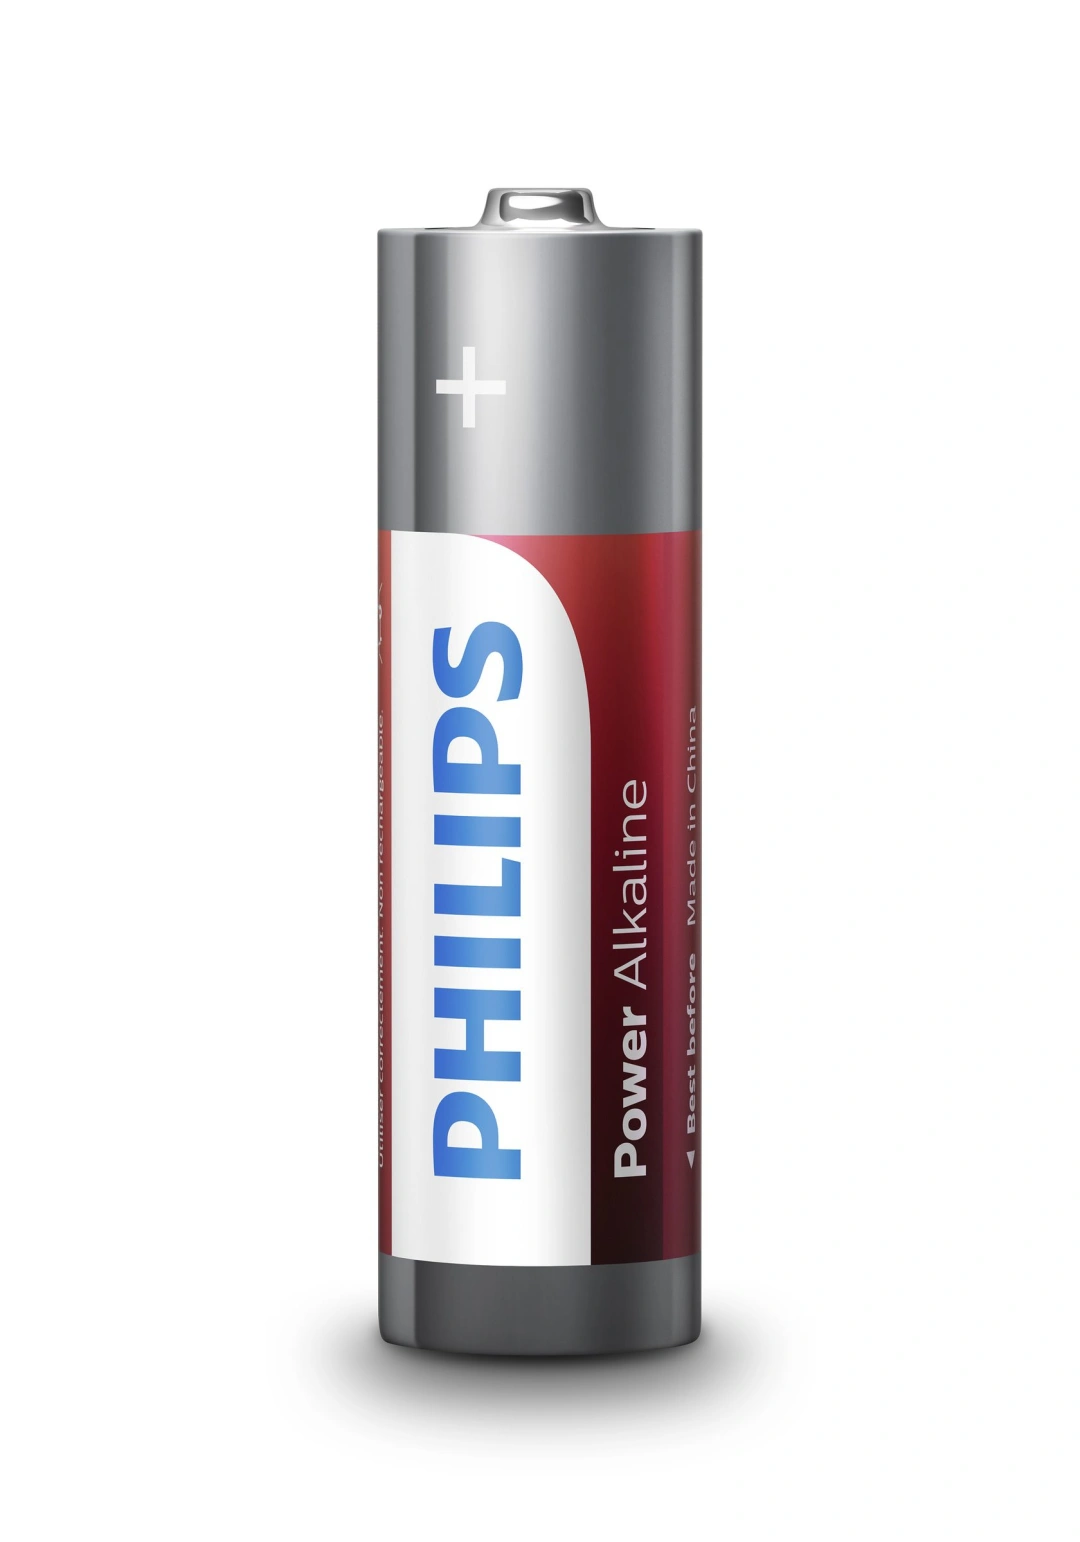 Philips Baterie LR6P4B/10